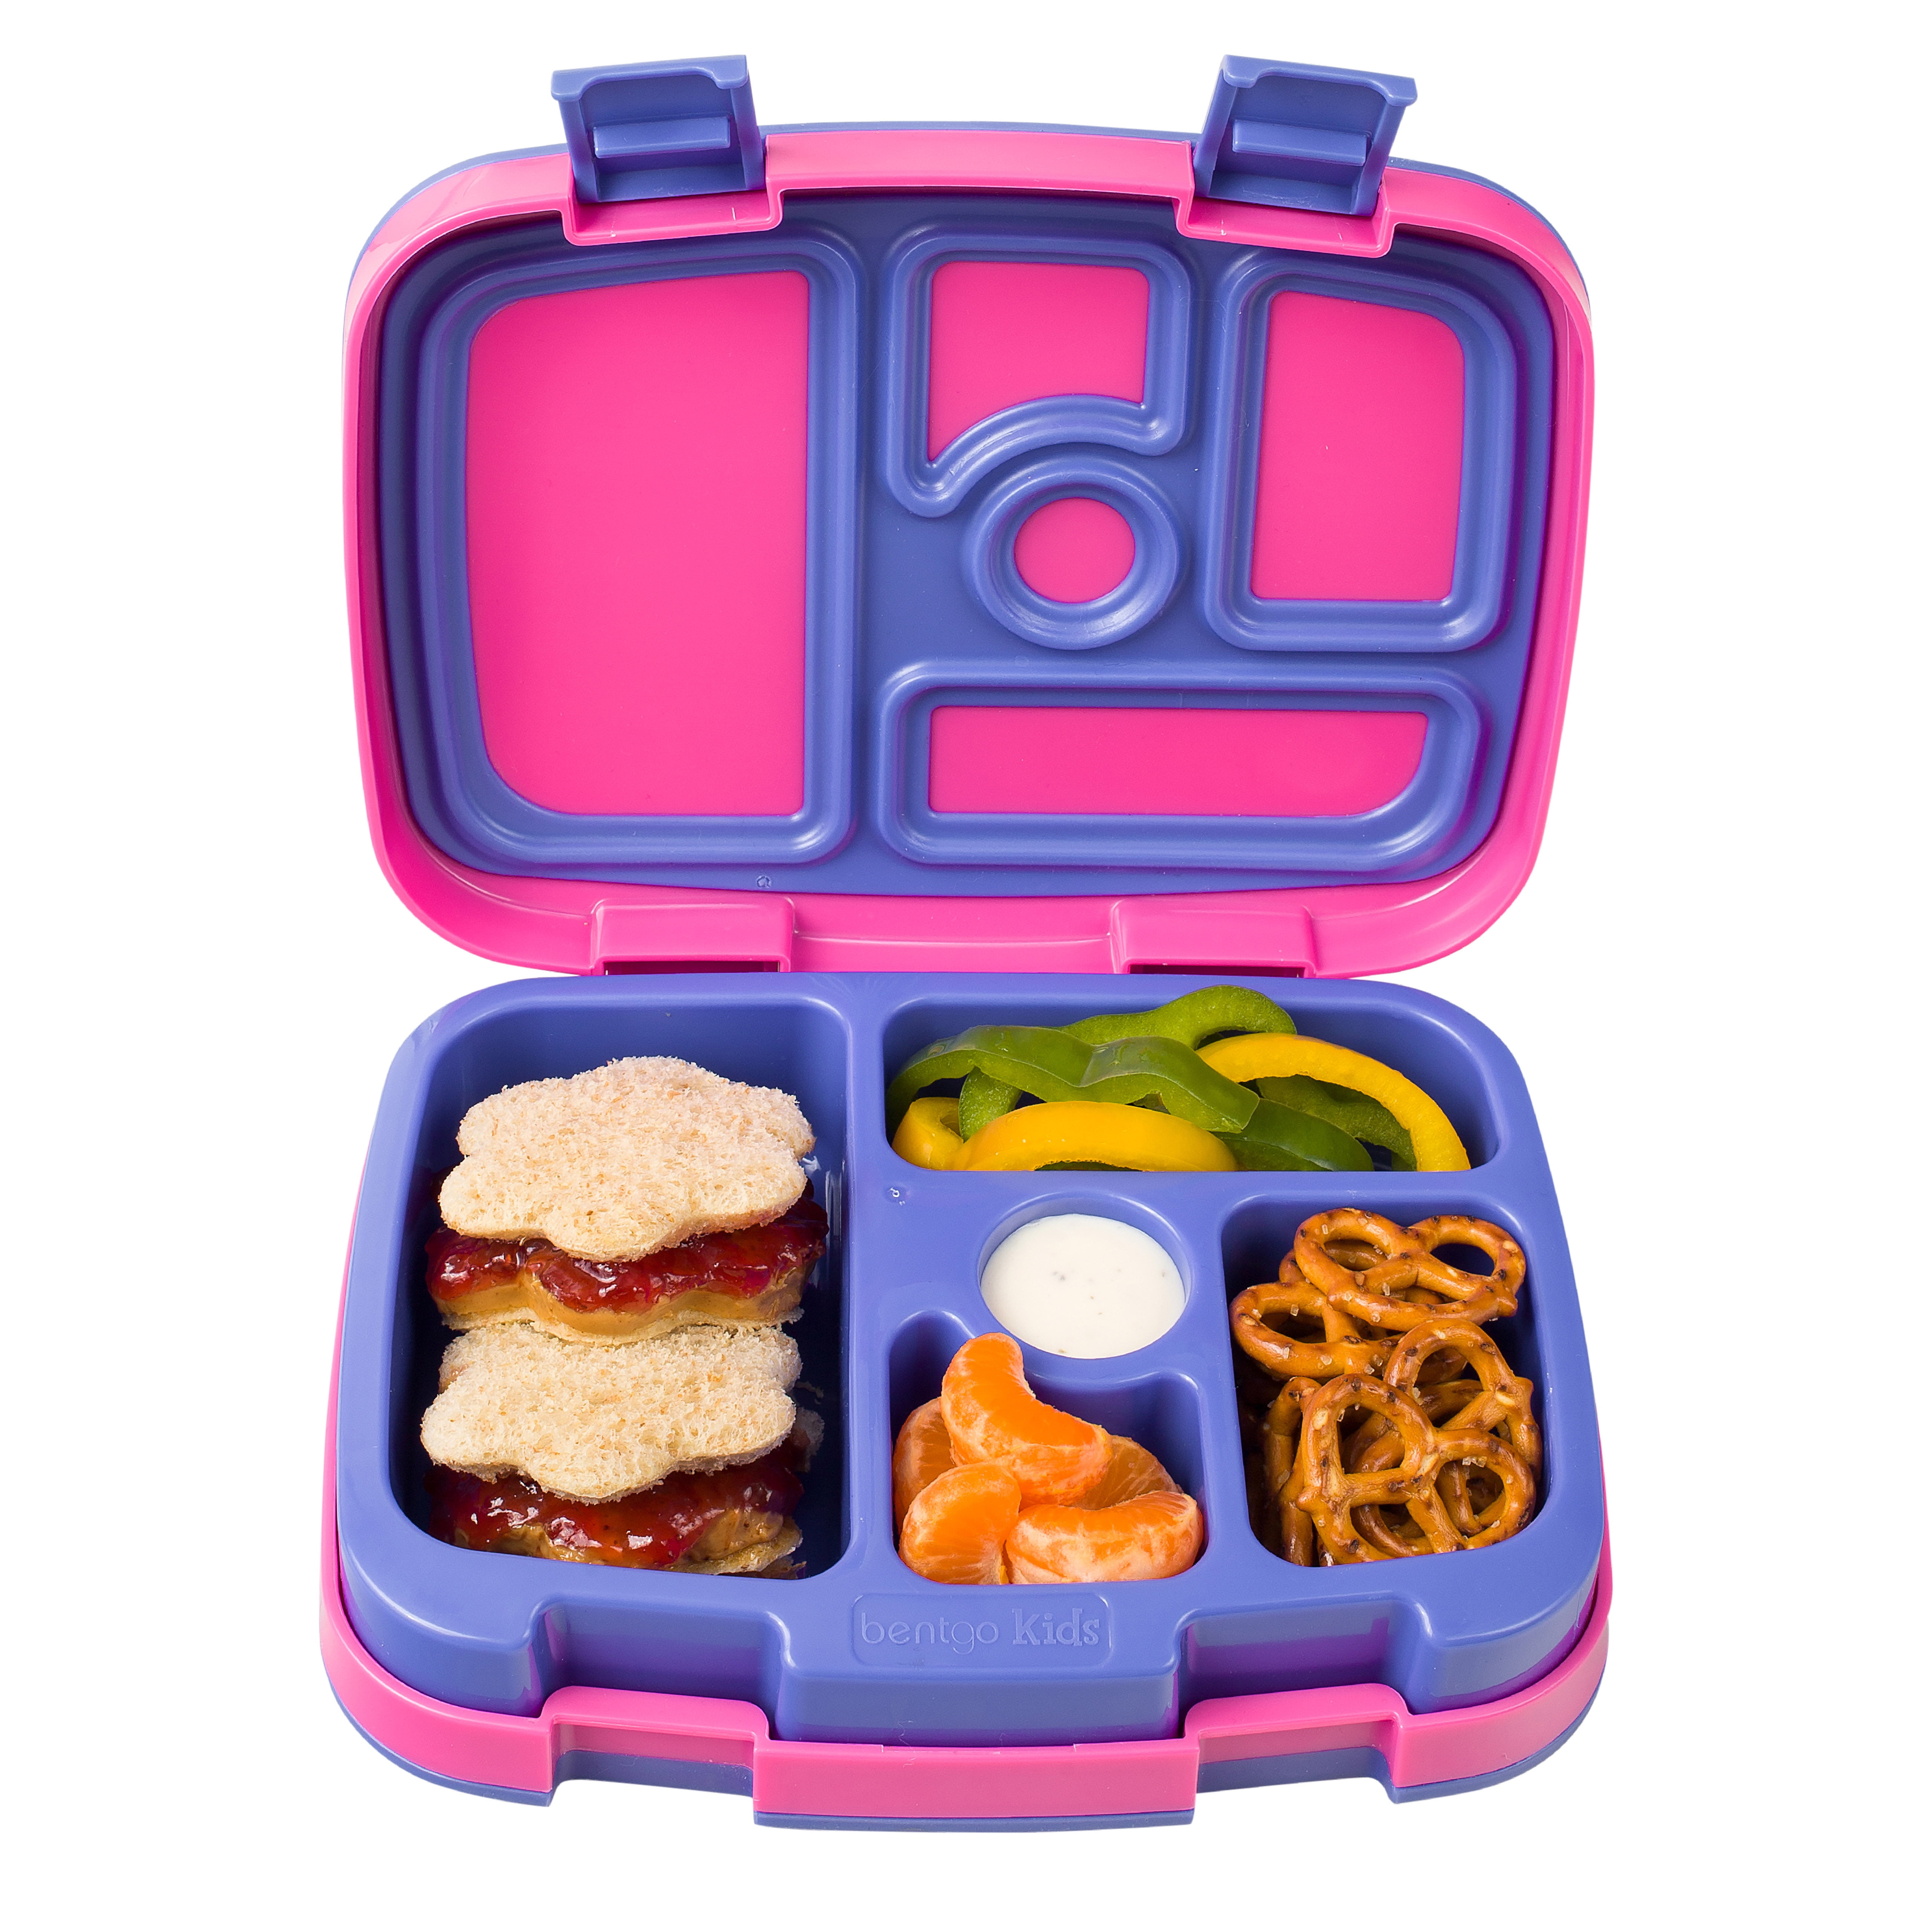 Bentgo Kids Brights Leak-Proof 5-Compartment Bento-Style Kids Lunch Box Fuchsia 